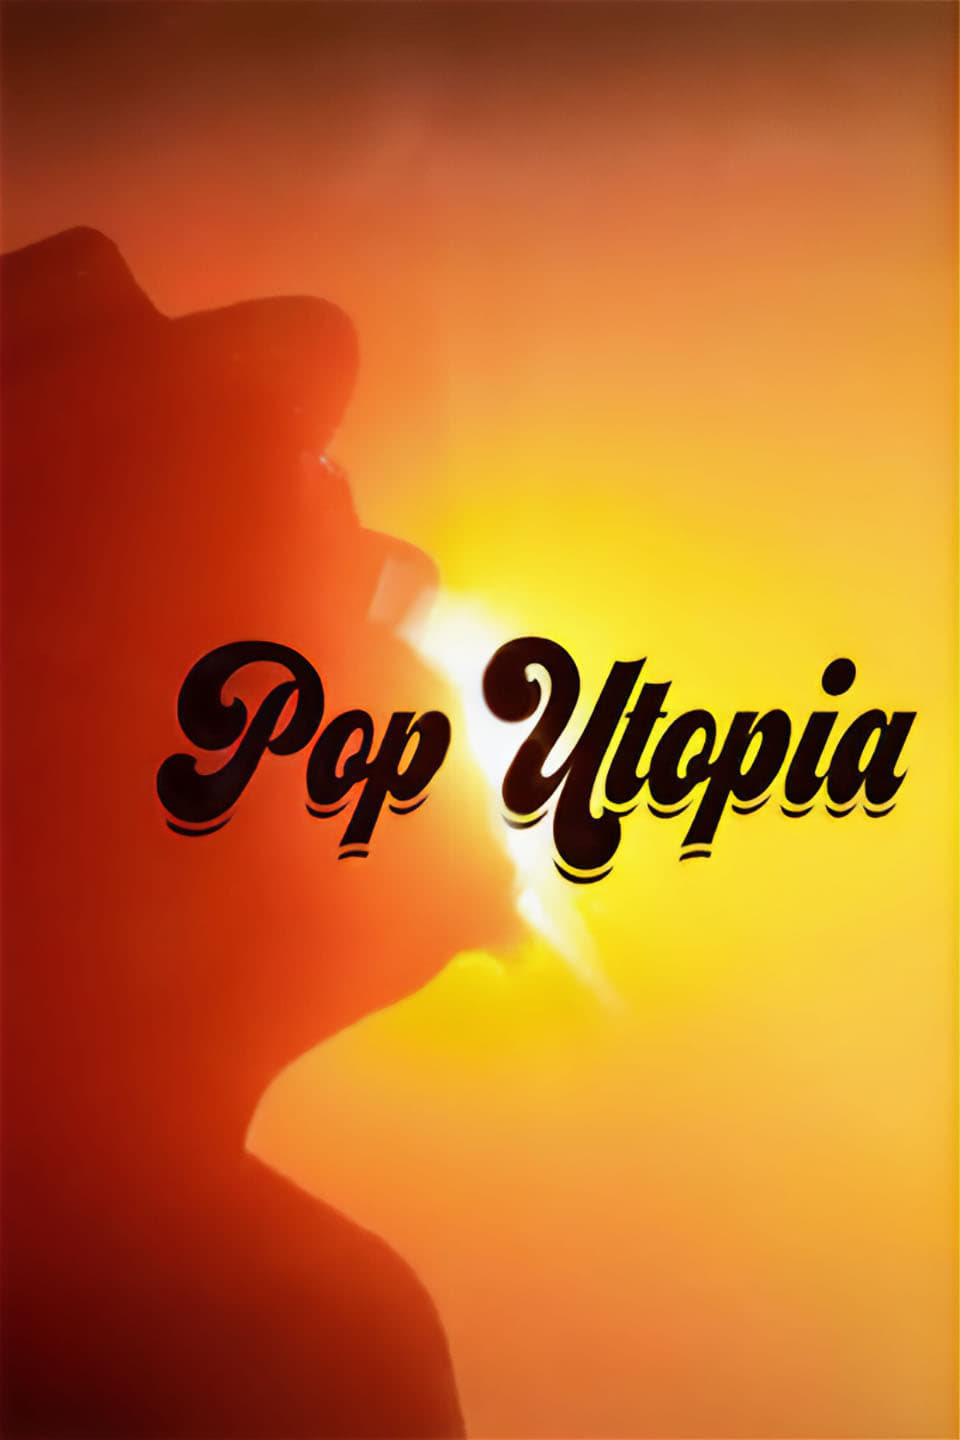 Pop Utopia